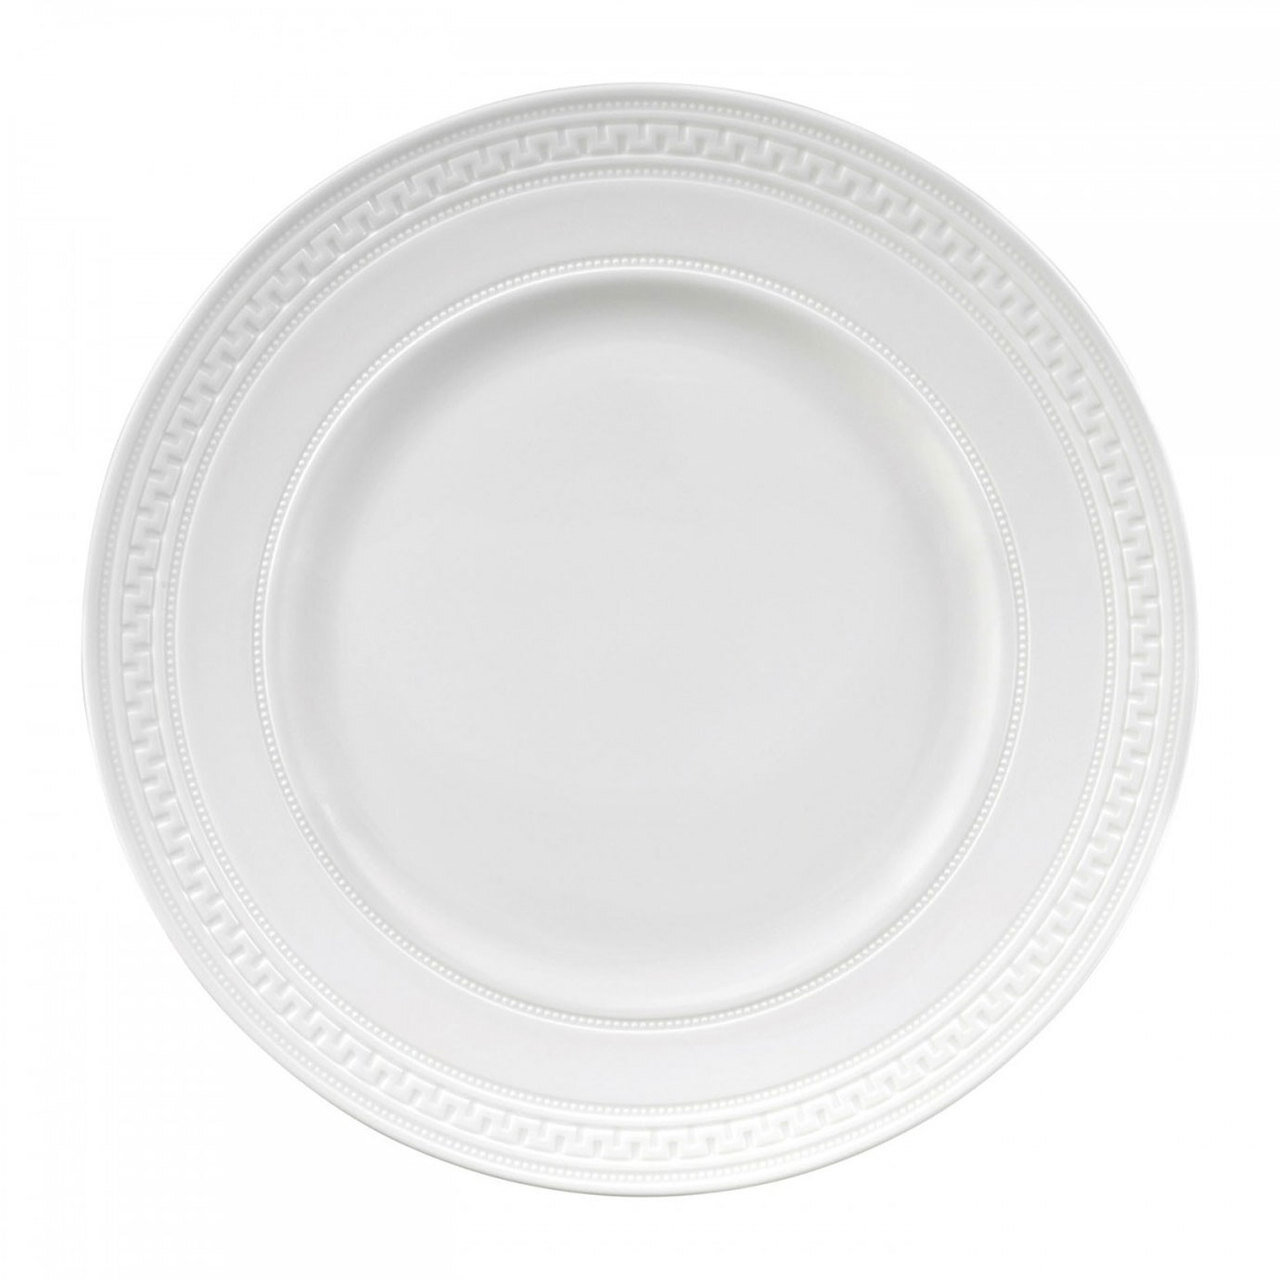 Wedgwood Intaglio Dinner Plate 10.75 Inch